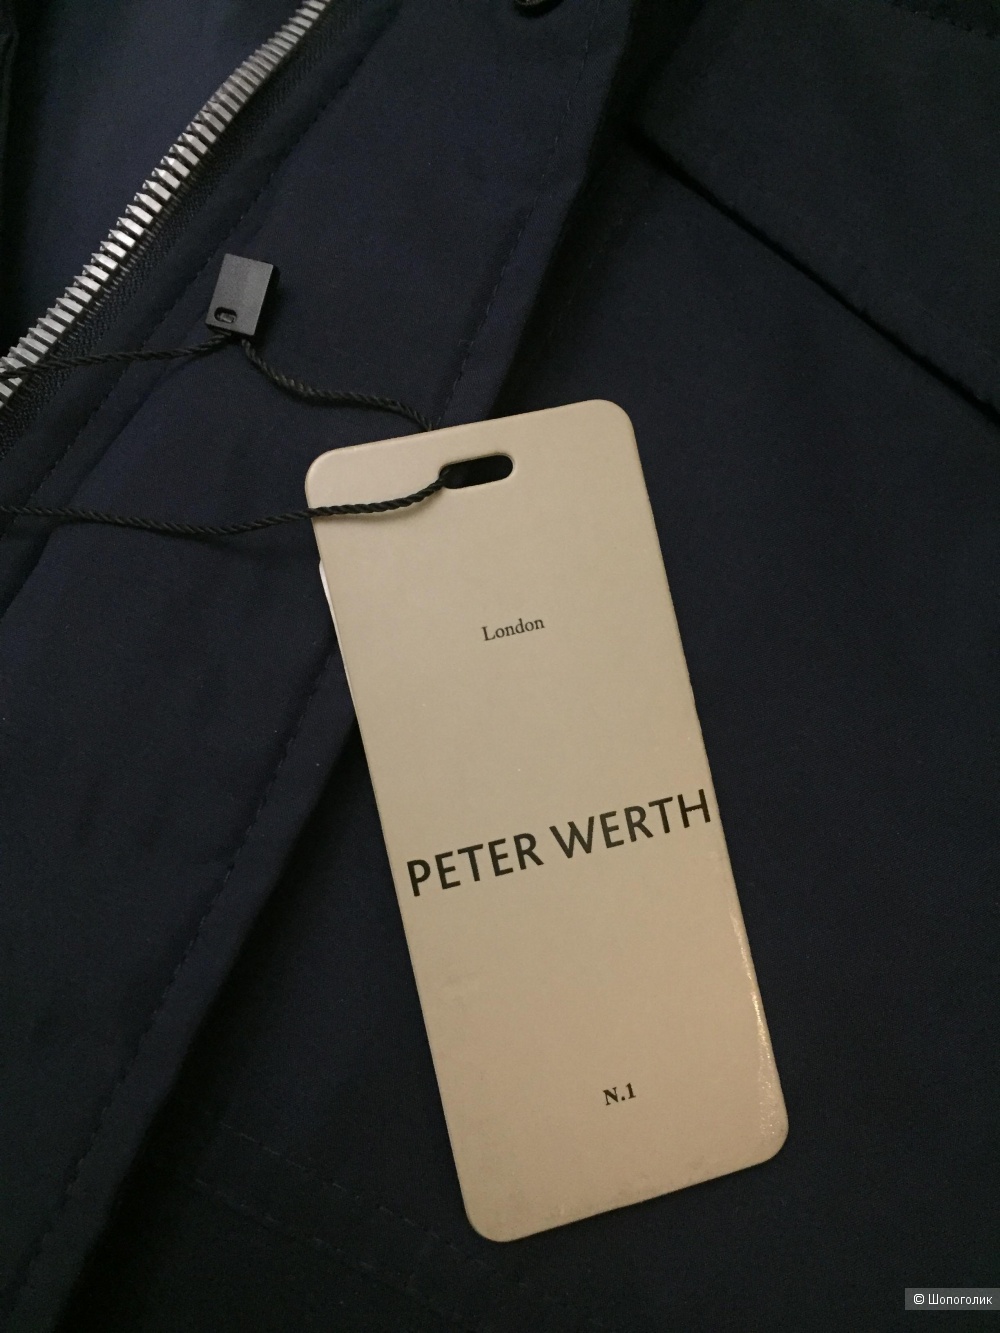 Peter werth пуховик 52